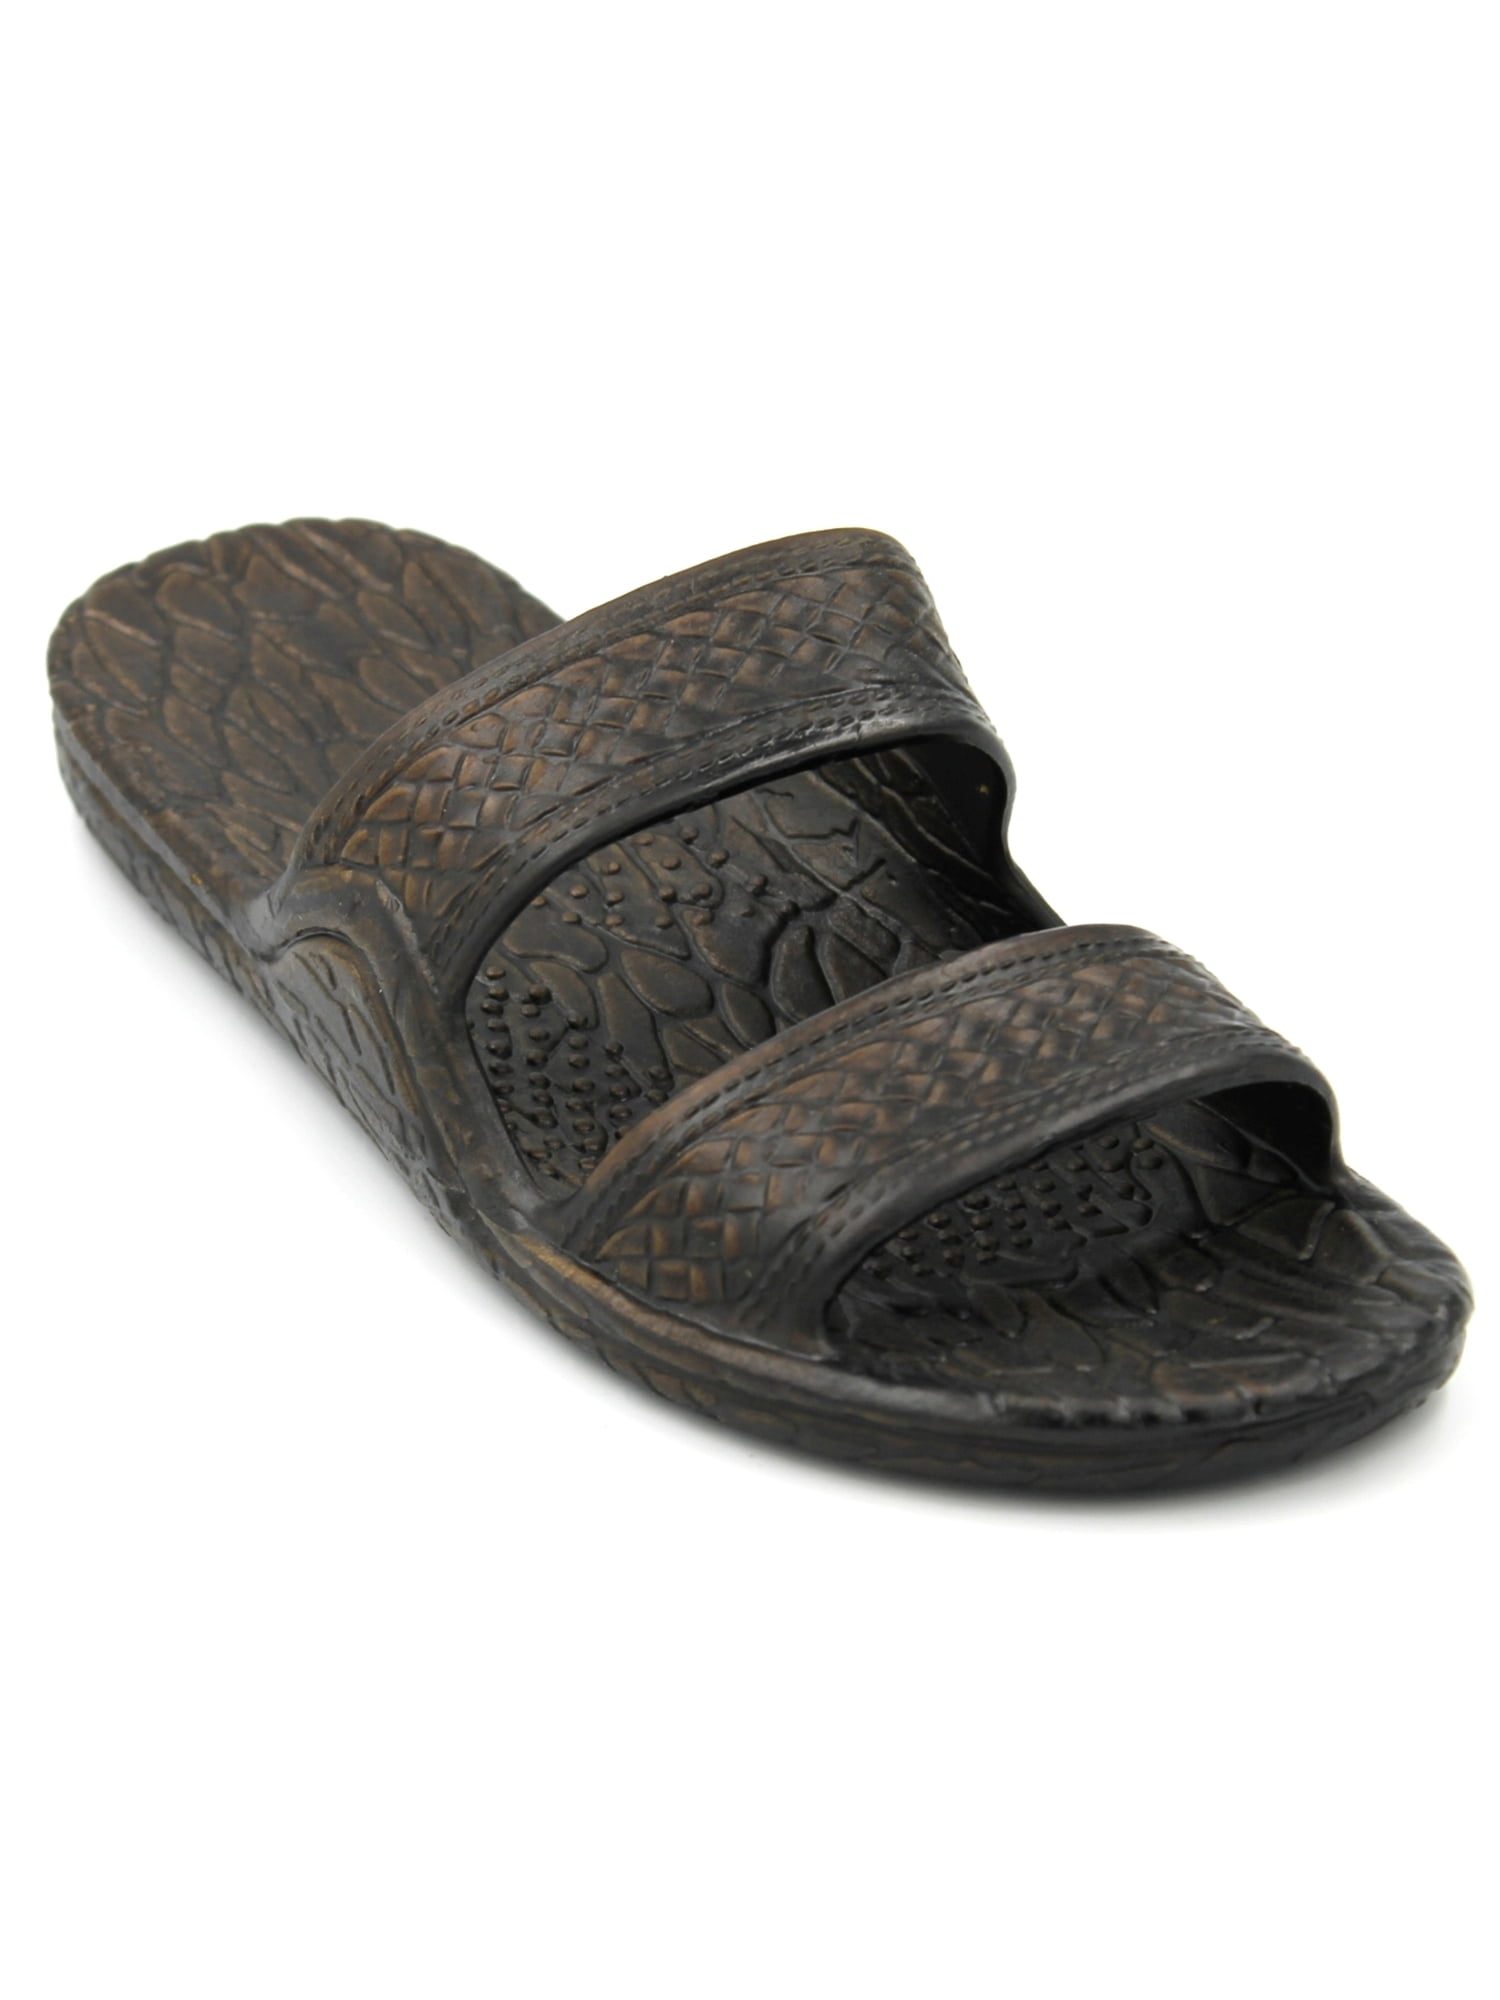 Pali Hawaii Unisex Hawaiian Jesus Sandals Brown Slip On Waterproof Choose Size